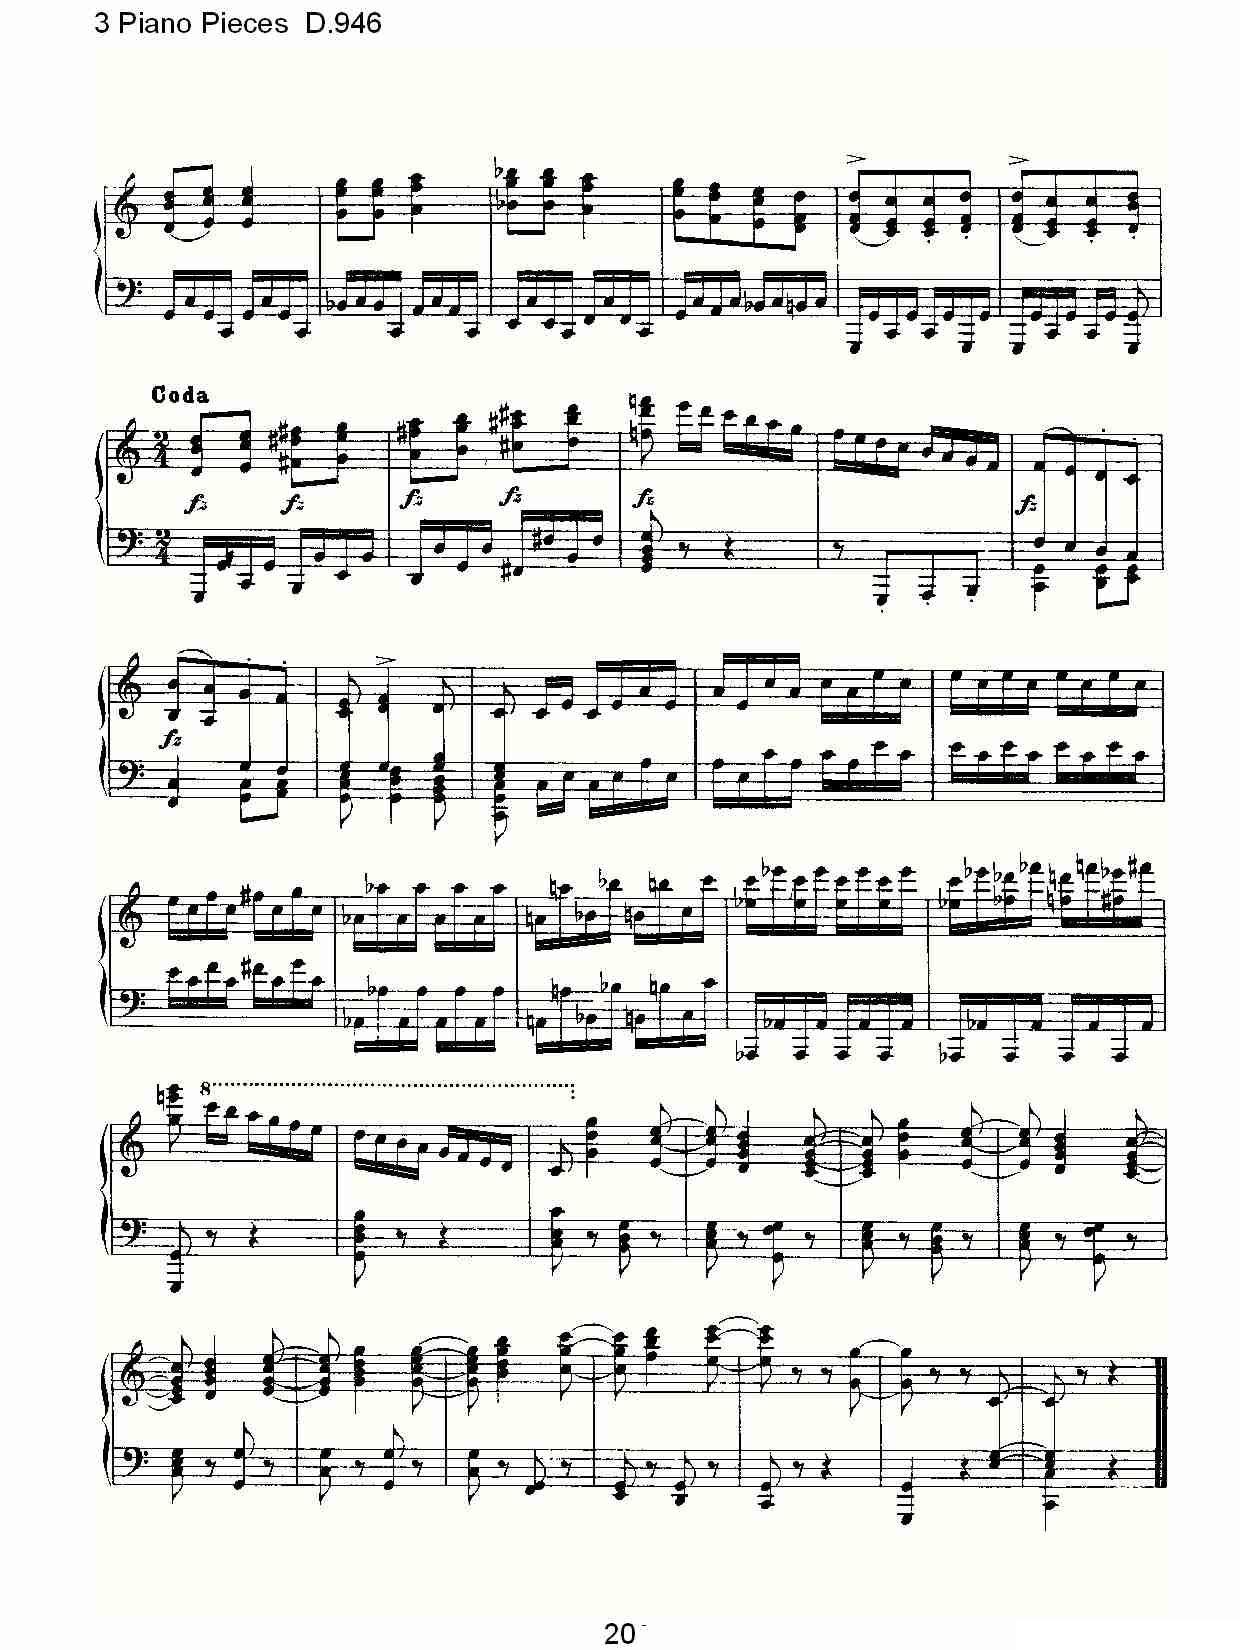 3 Piano Pieces D.946（钢琴三联奏D.946）钢琴曲谱（图20）